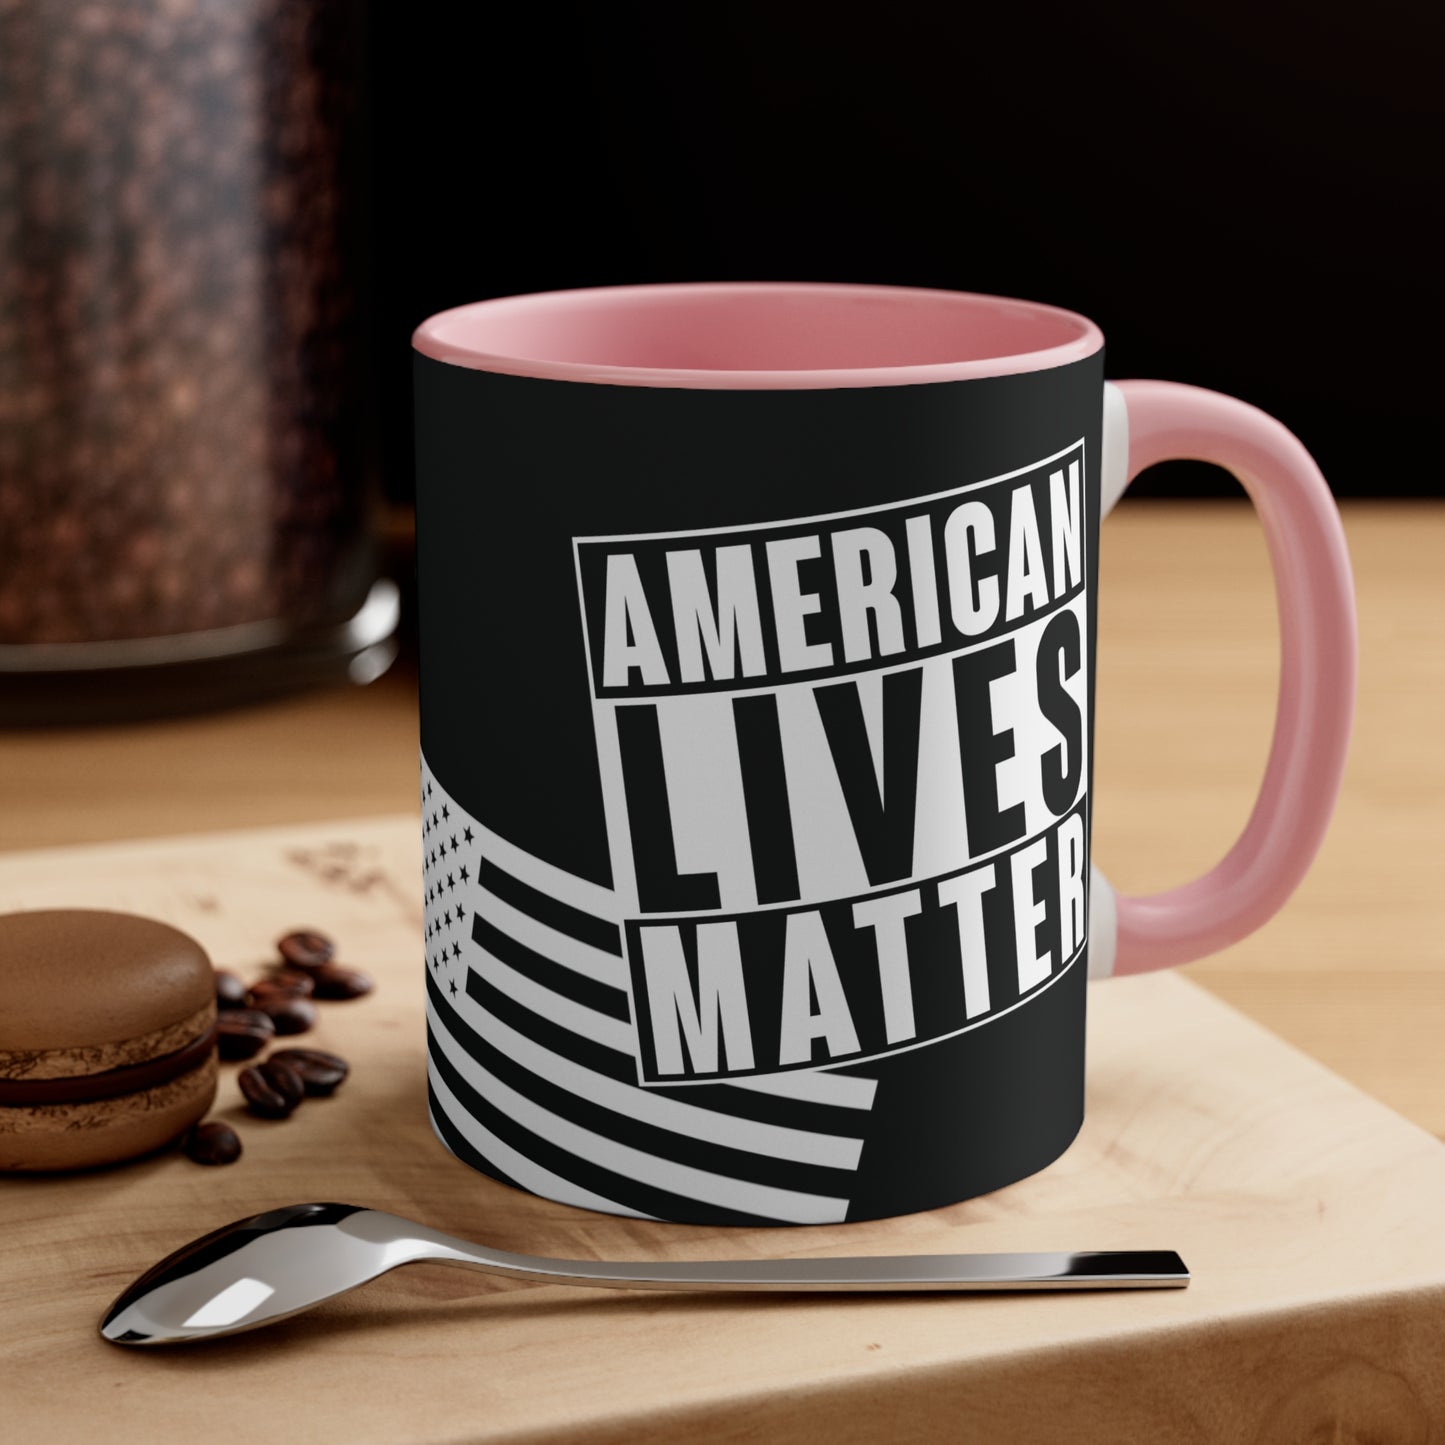 American Lives Matter Graffiti Accent Mug